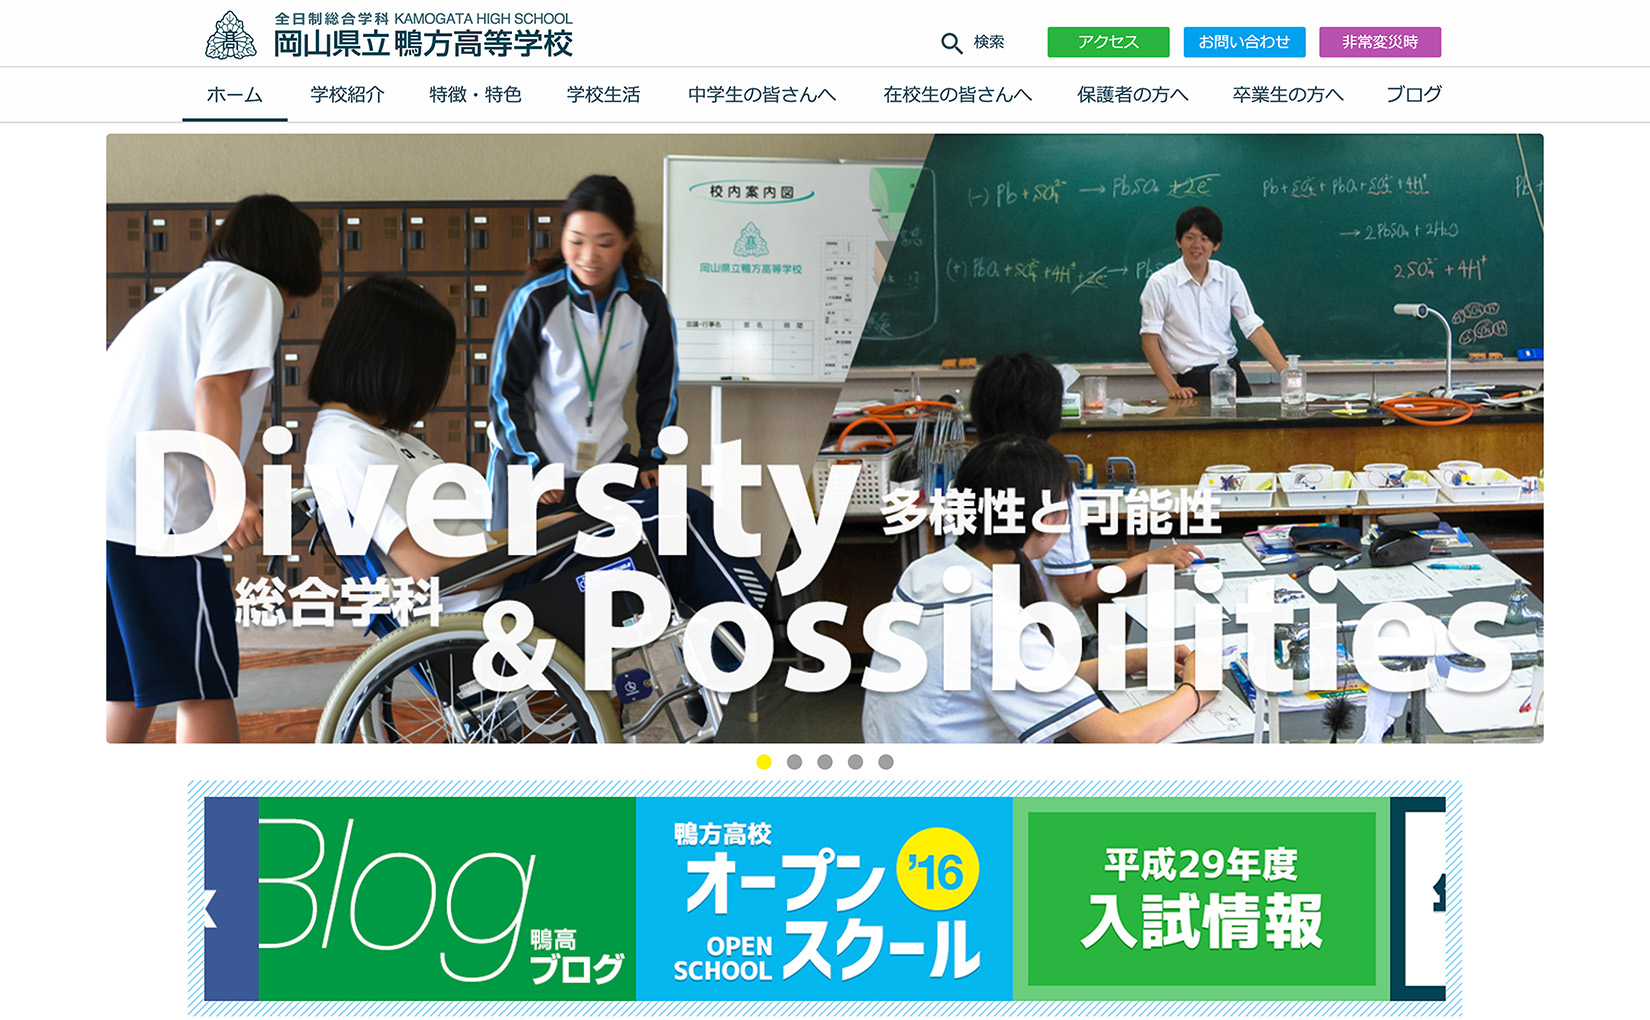 Kamogata High School Website